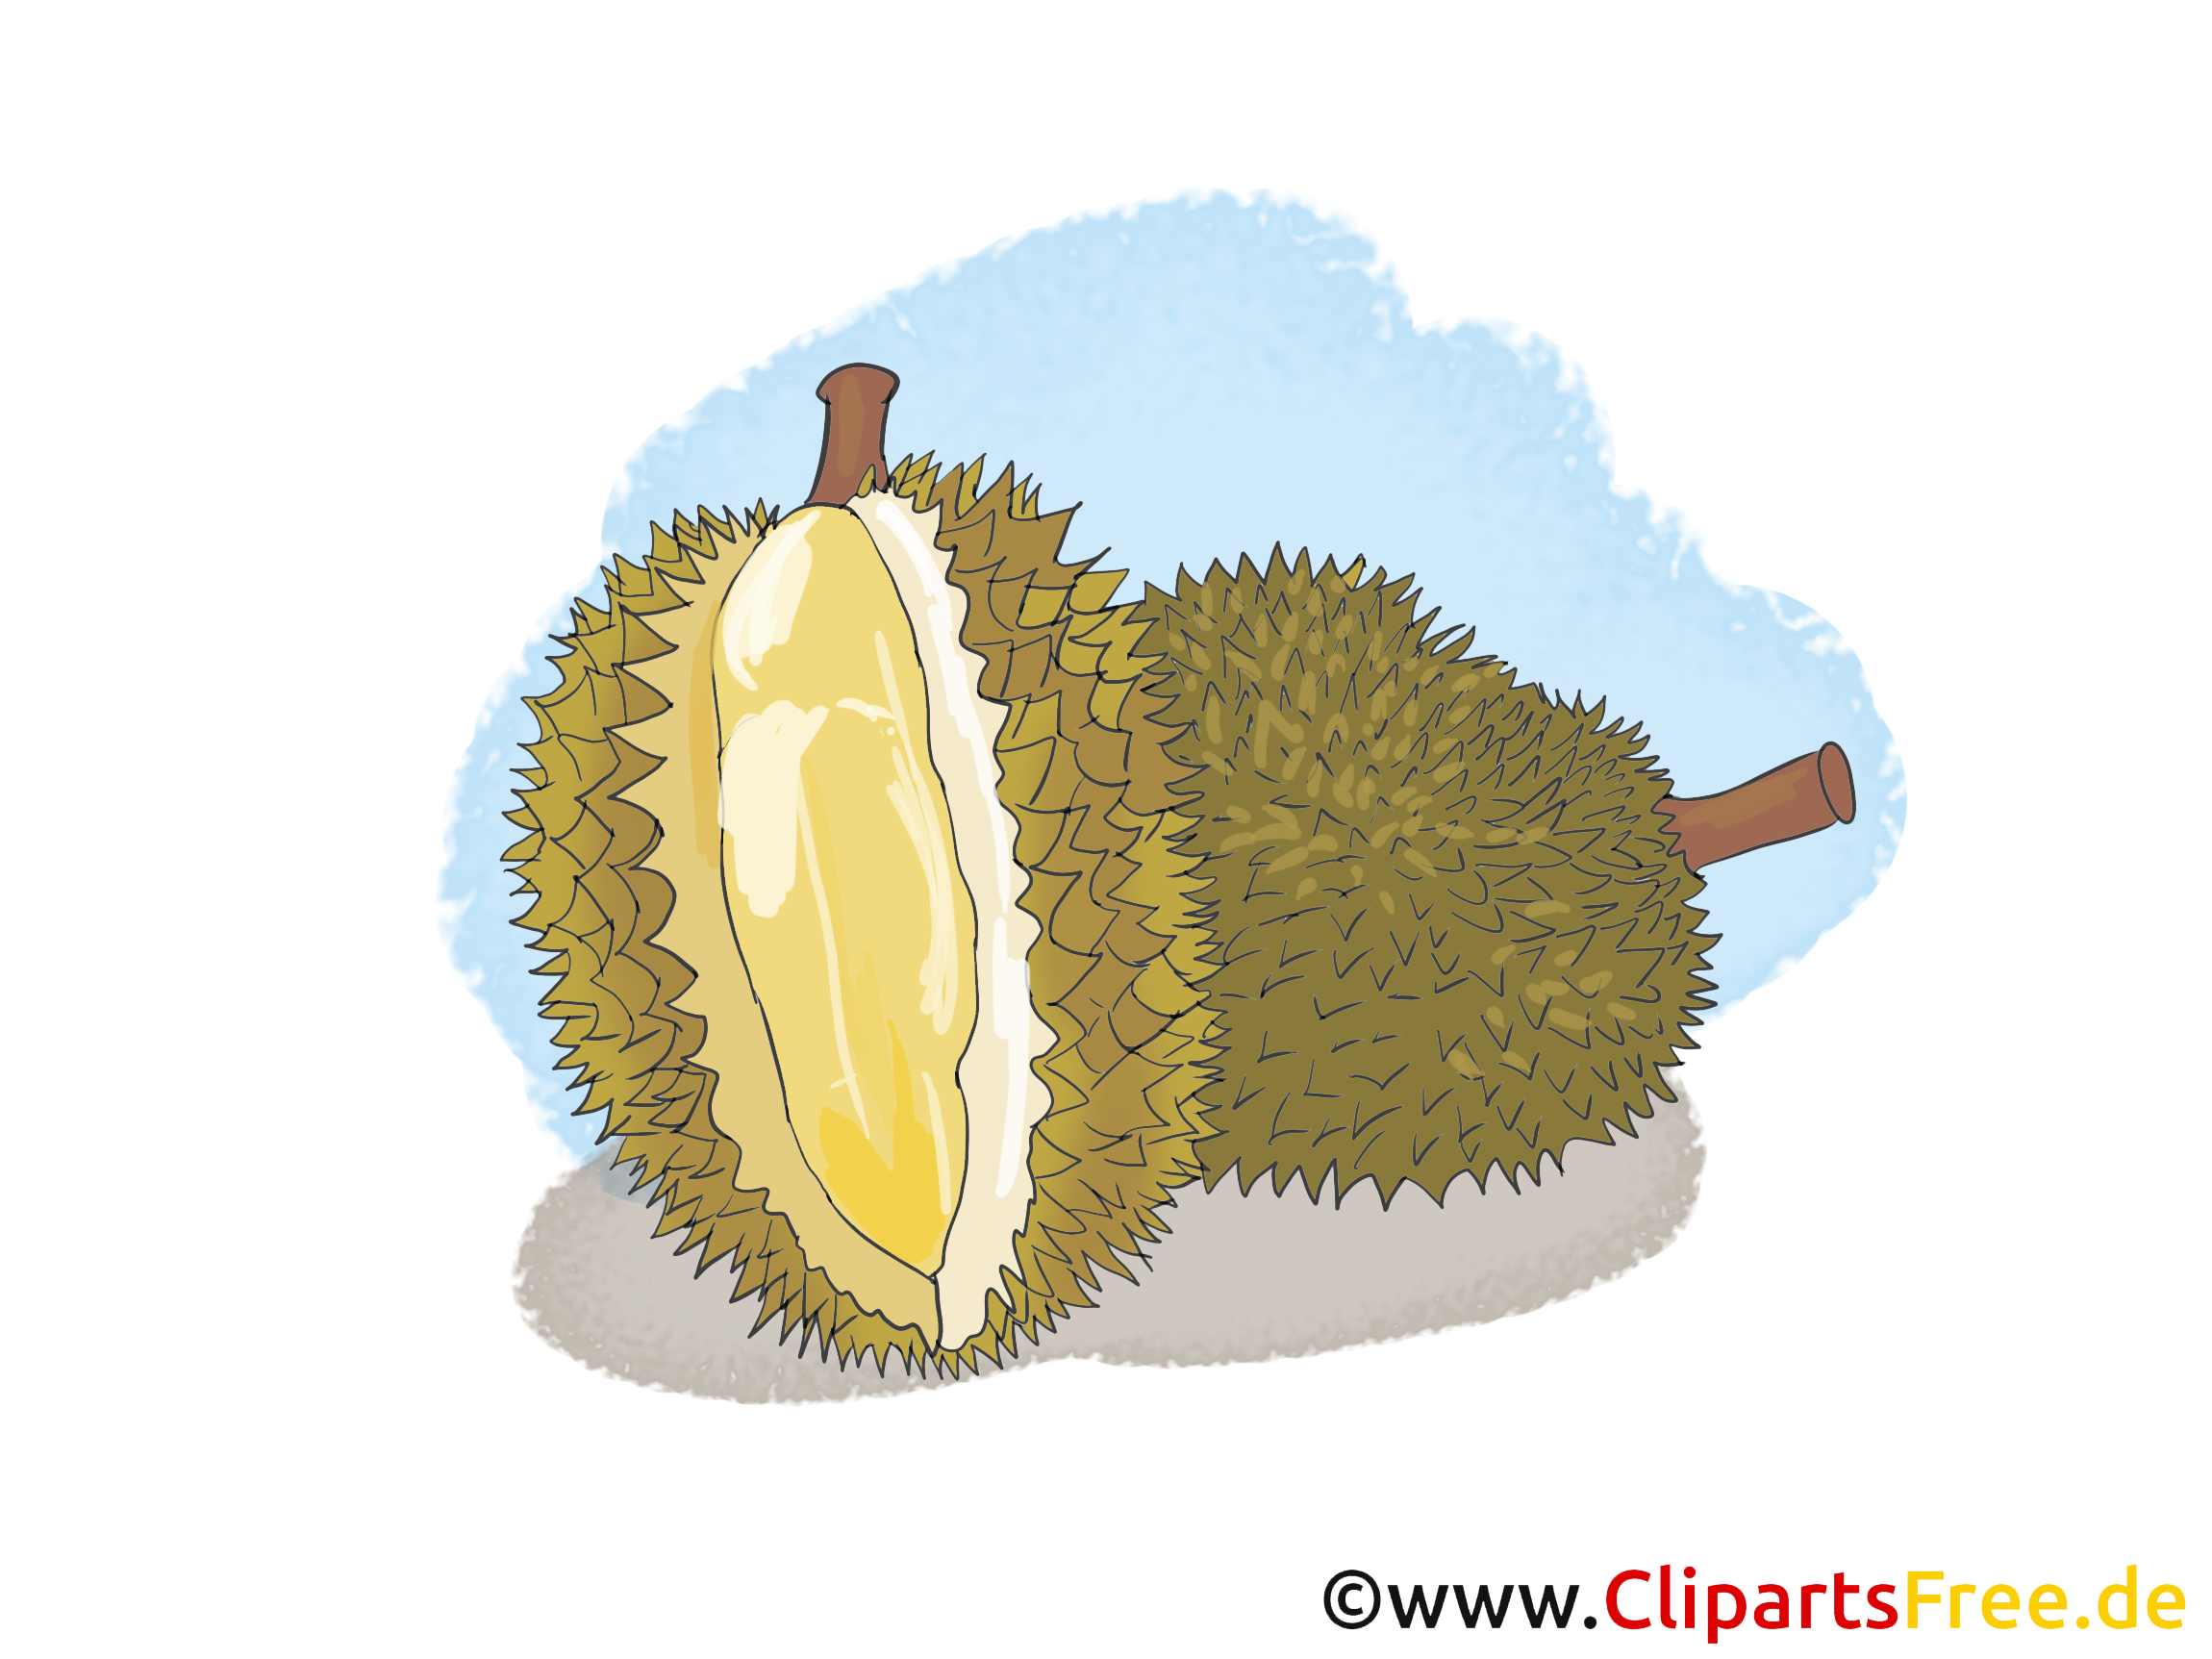 Bildtitel  Durian Illustration Bild Clipart Kostenlos